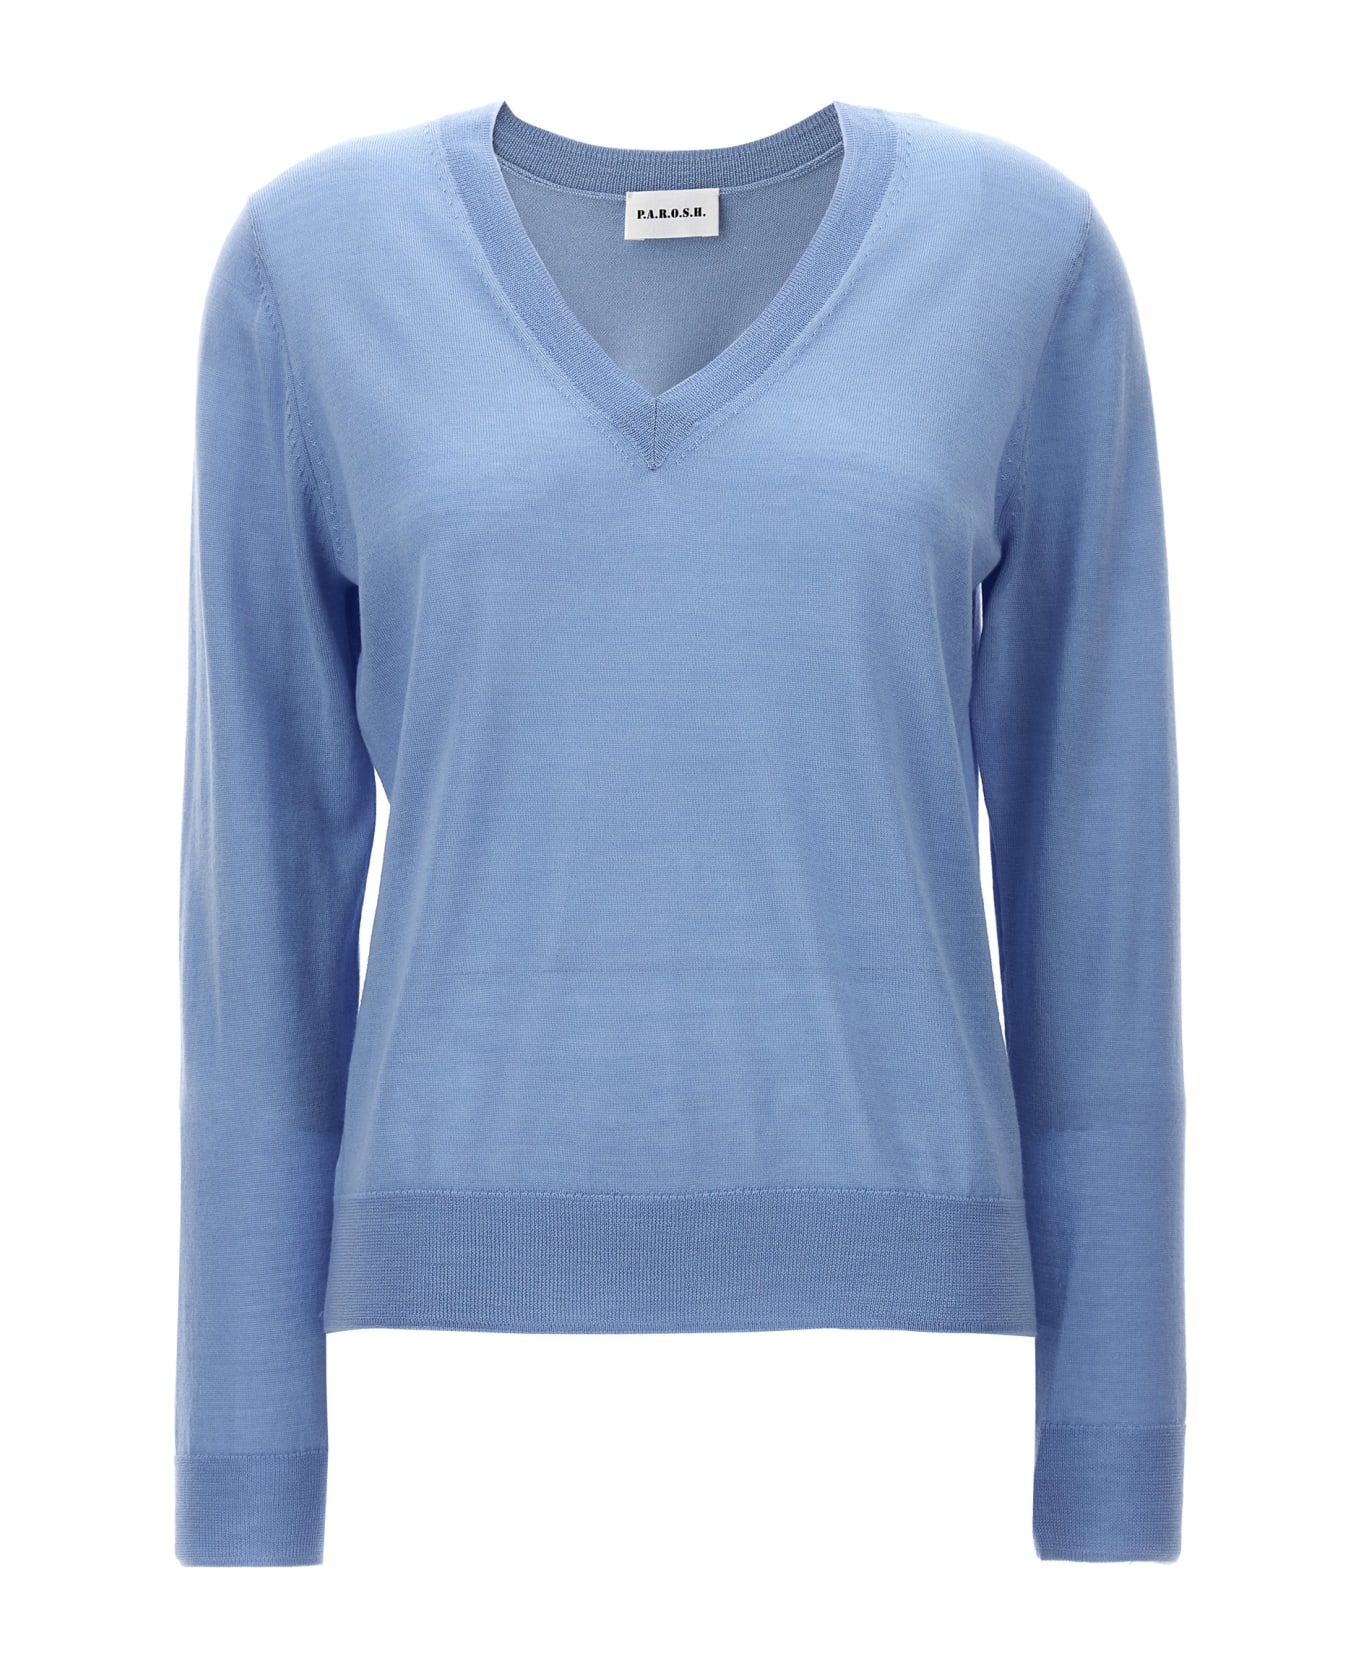 Parosh V-neck Sweater - LIGHT BLUE